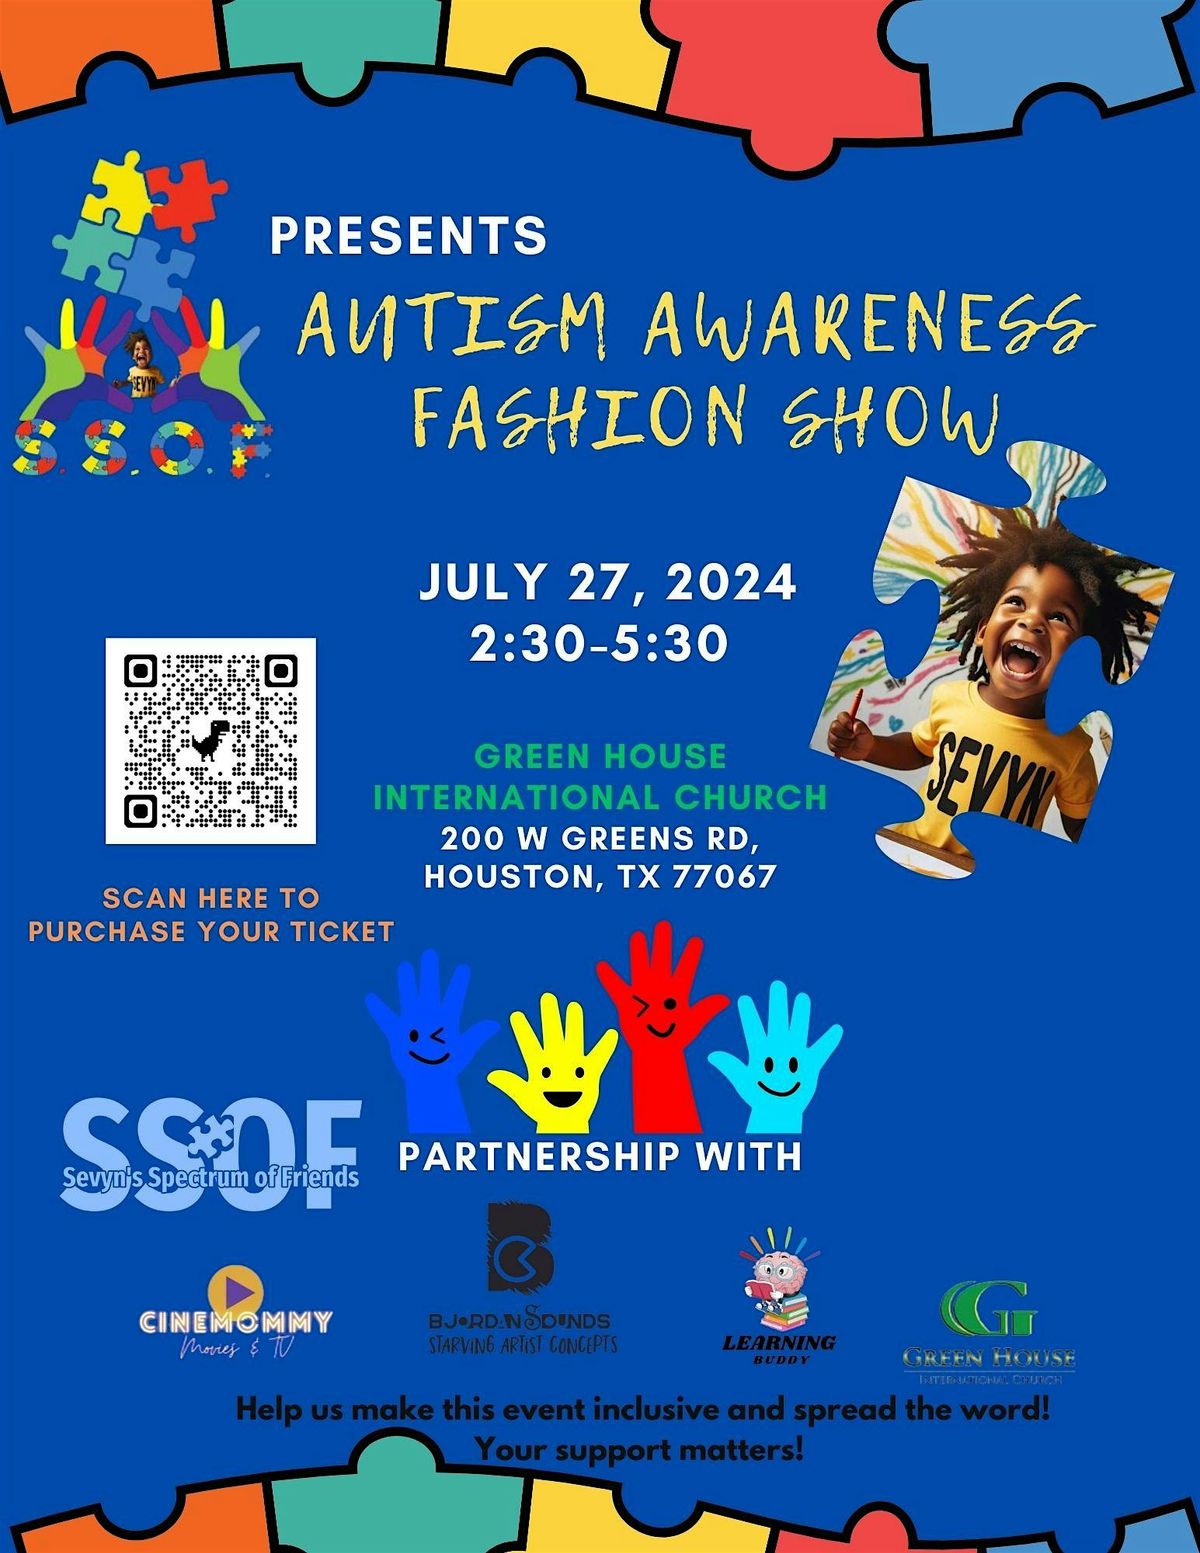 Autism Awareness Fashion Show